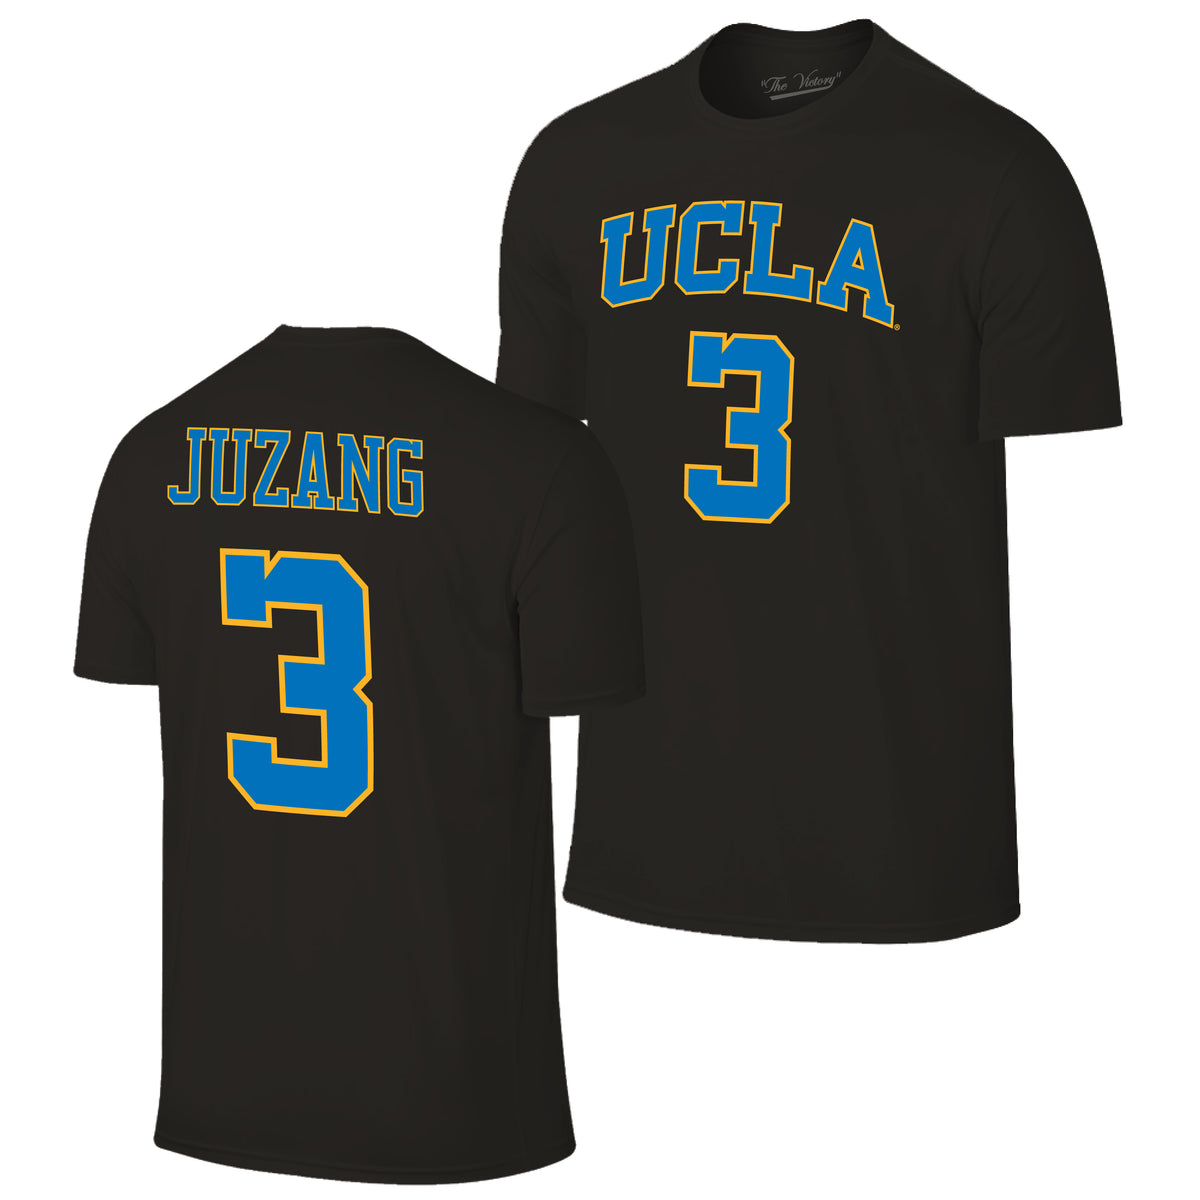 Johnny Juzang UCLA Bruins Jersey Tee